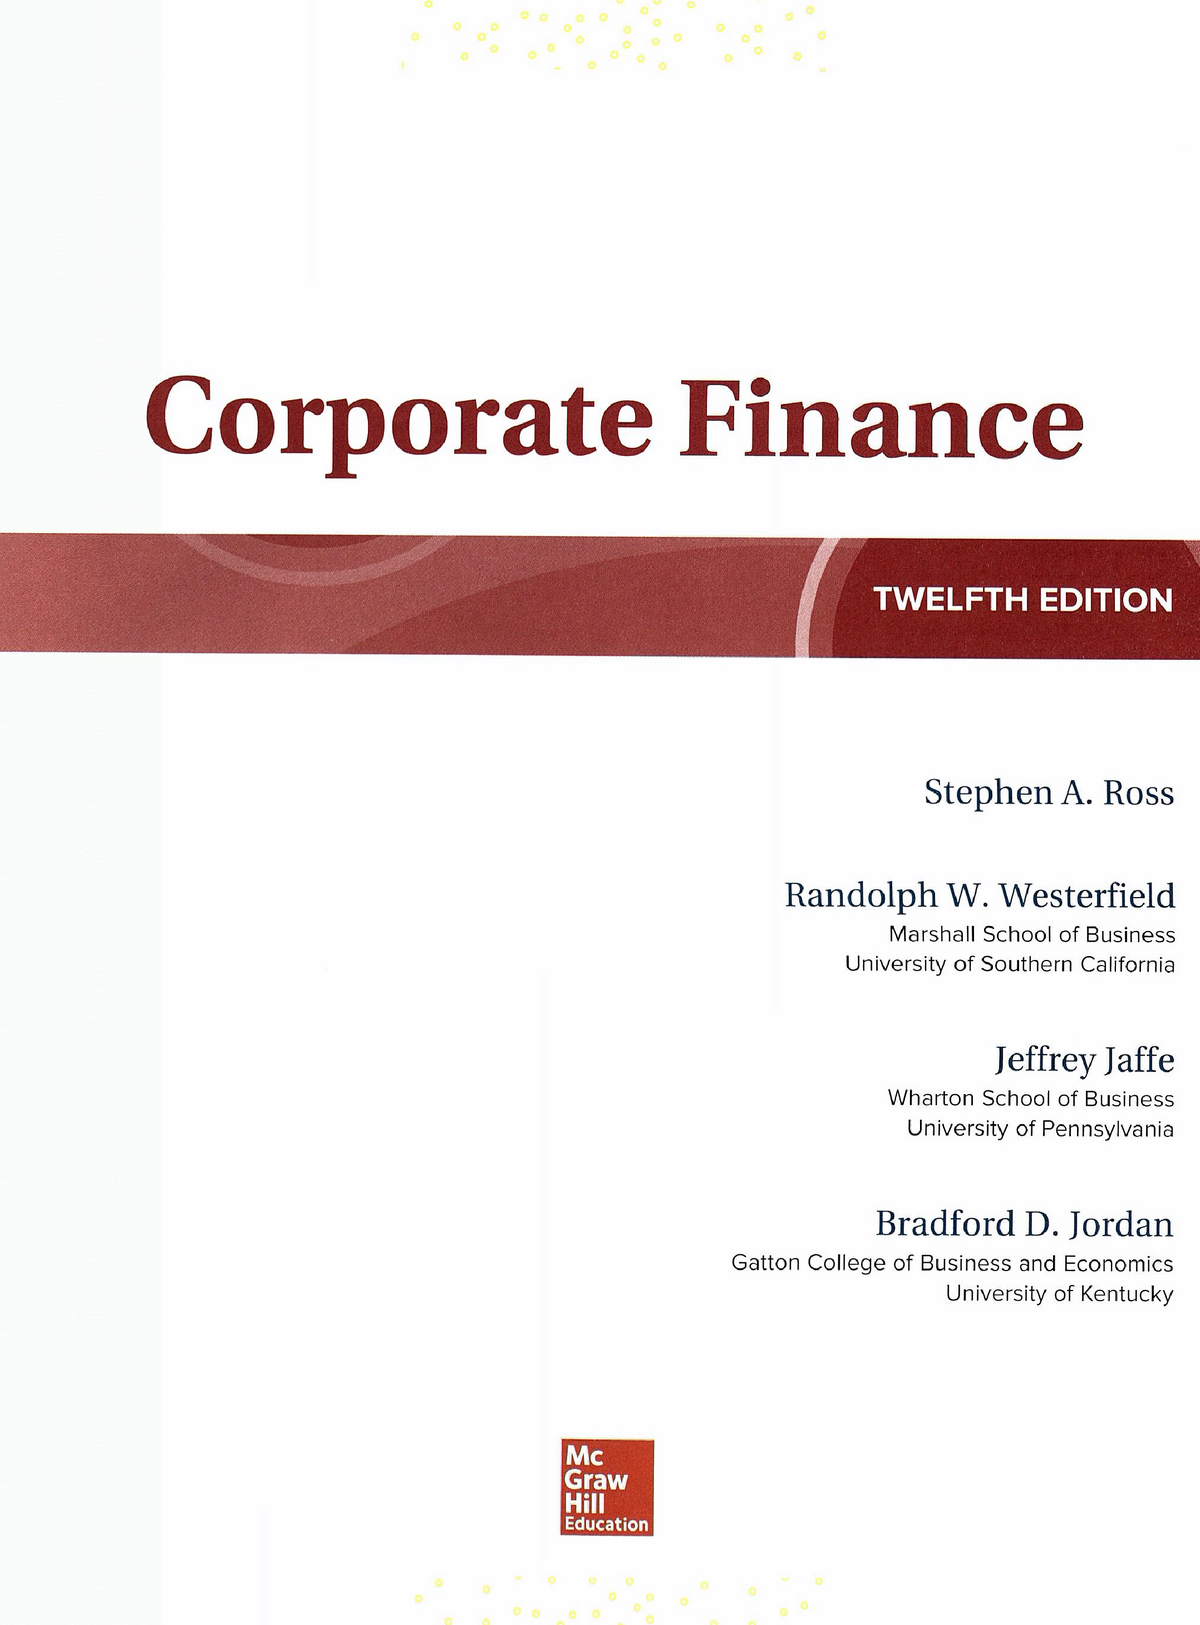 case study of corporate finance